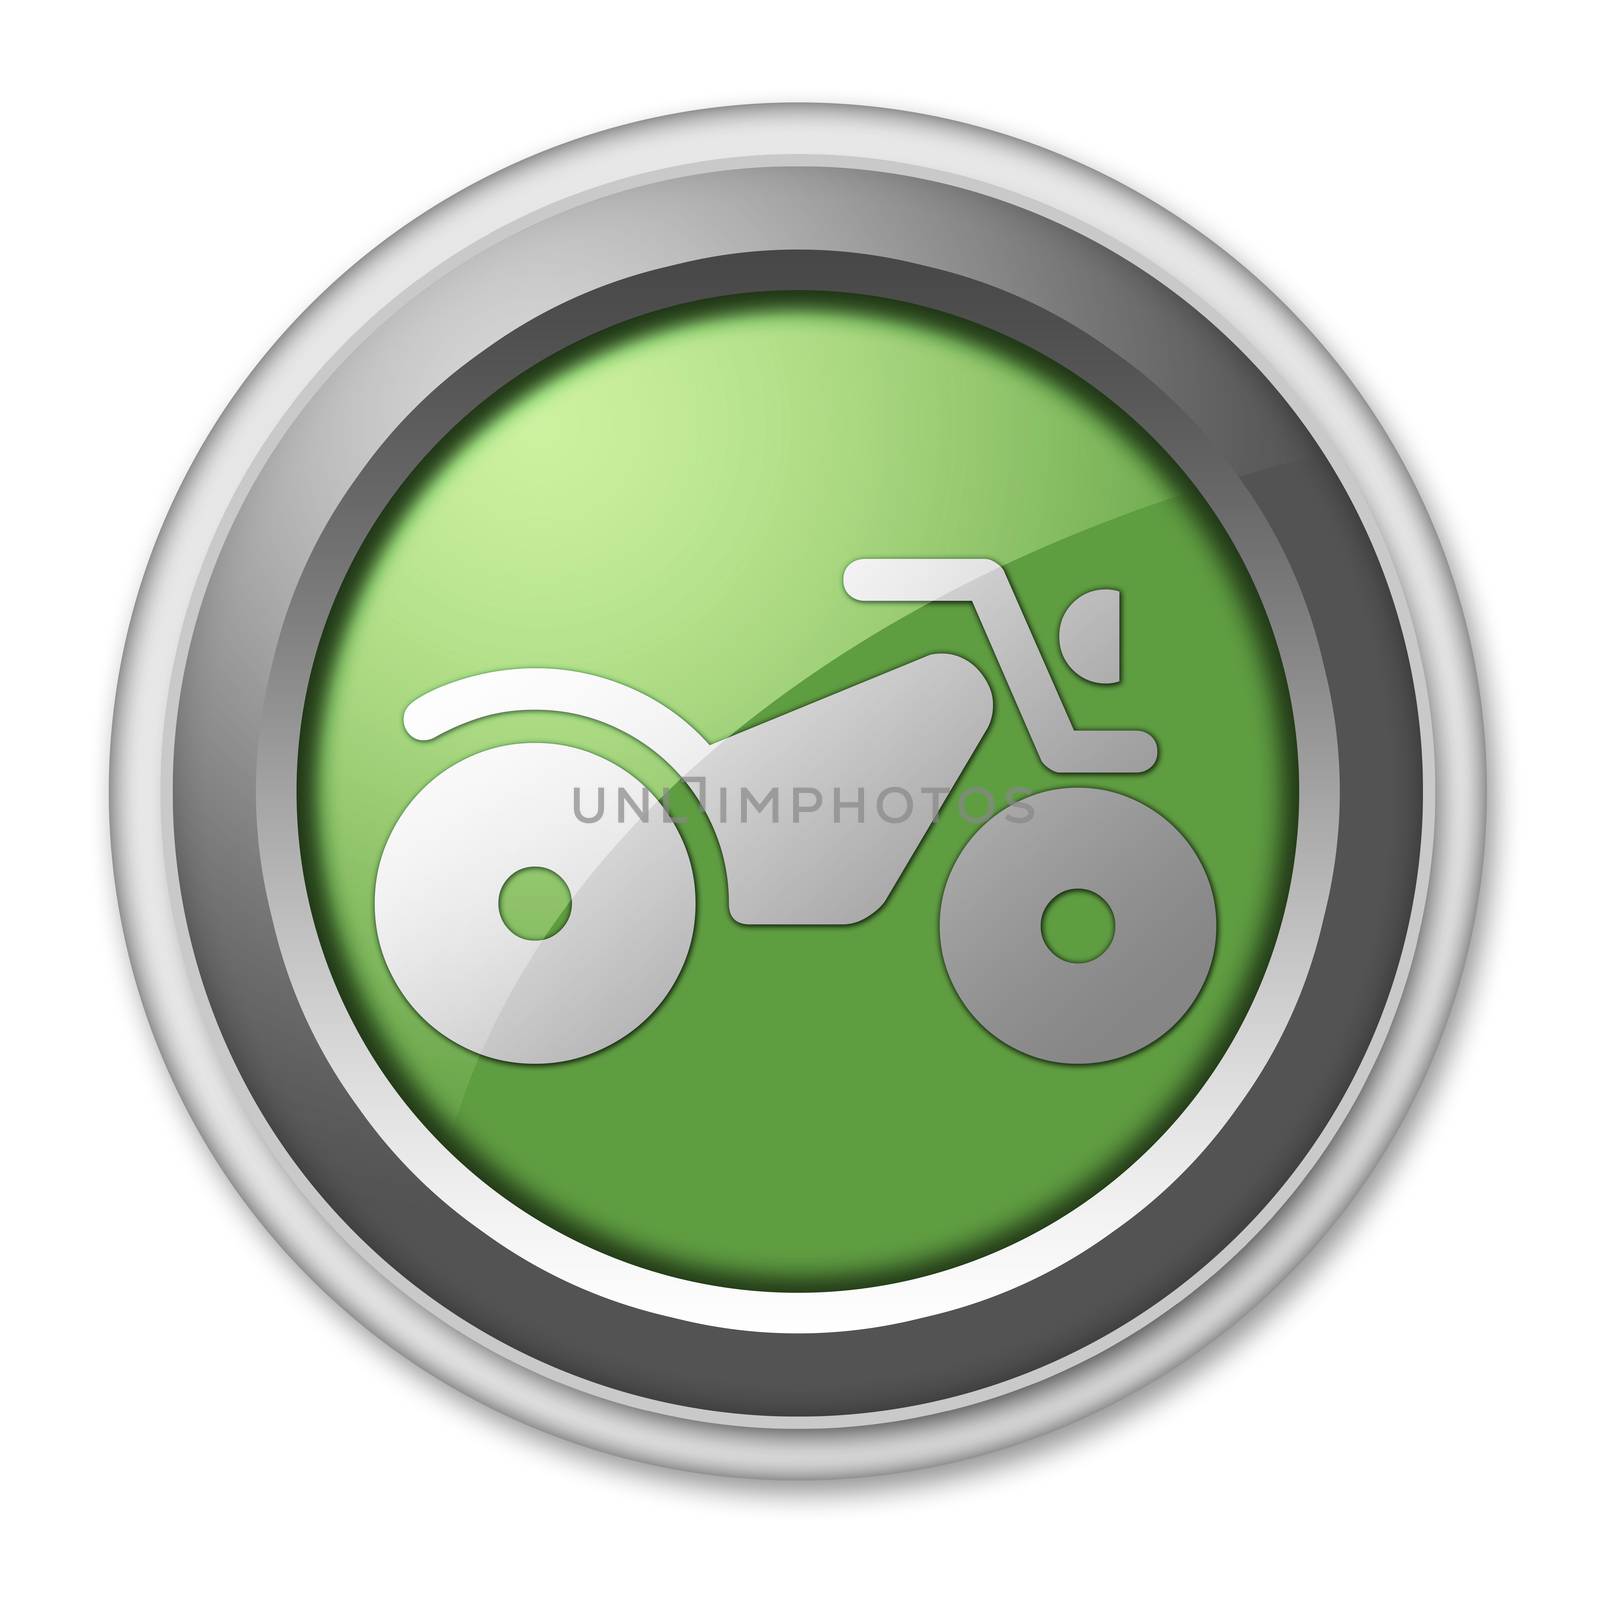 Icon, Button, Pictogram with ATV symbol